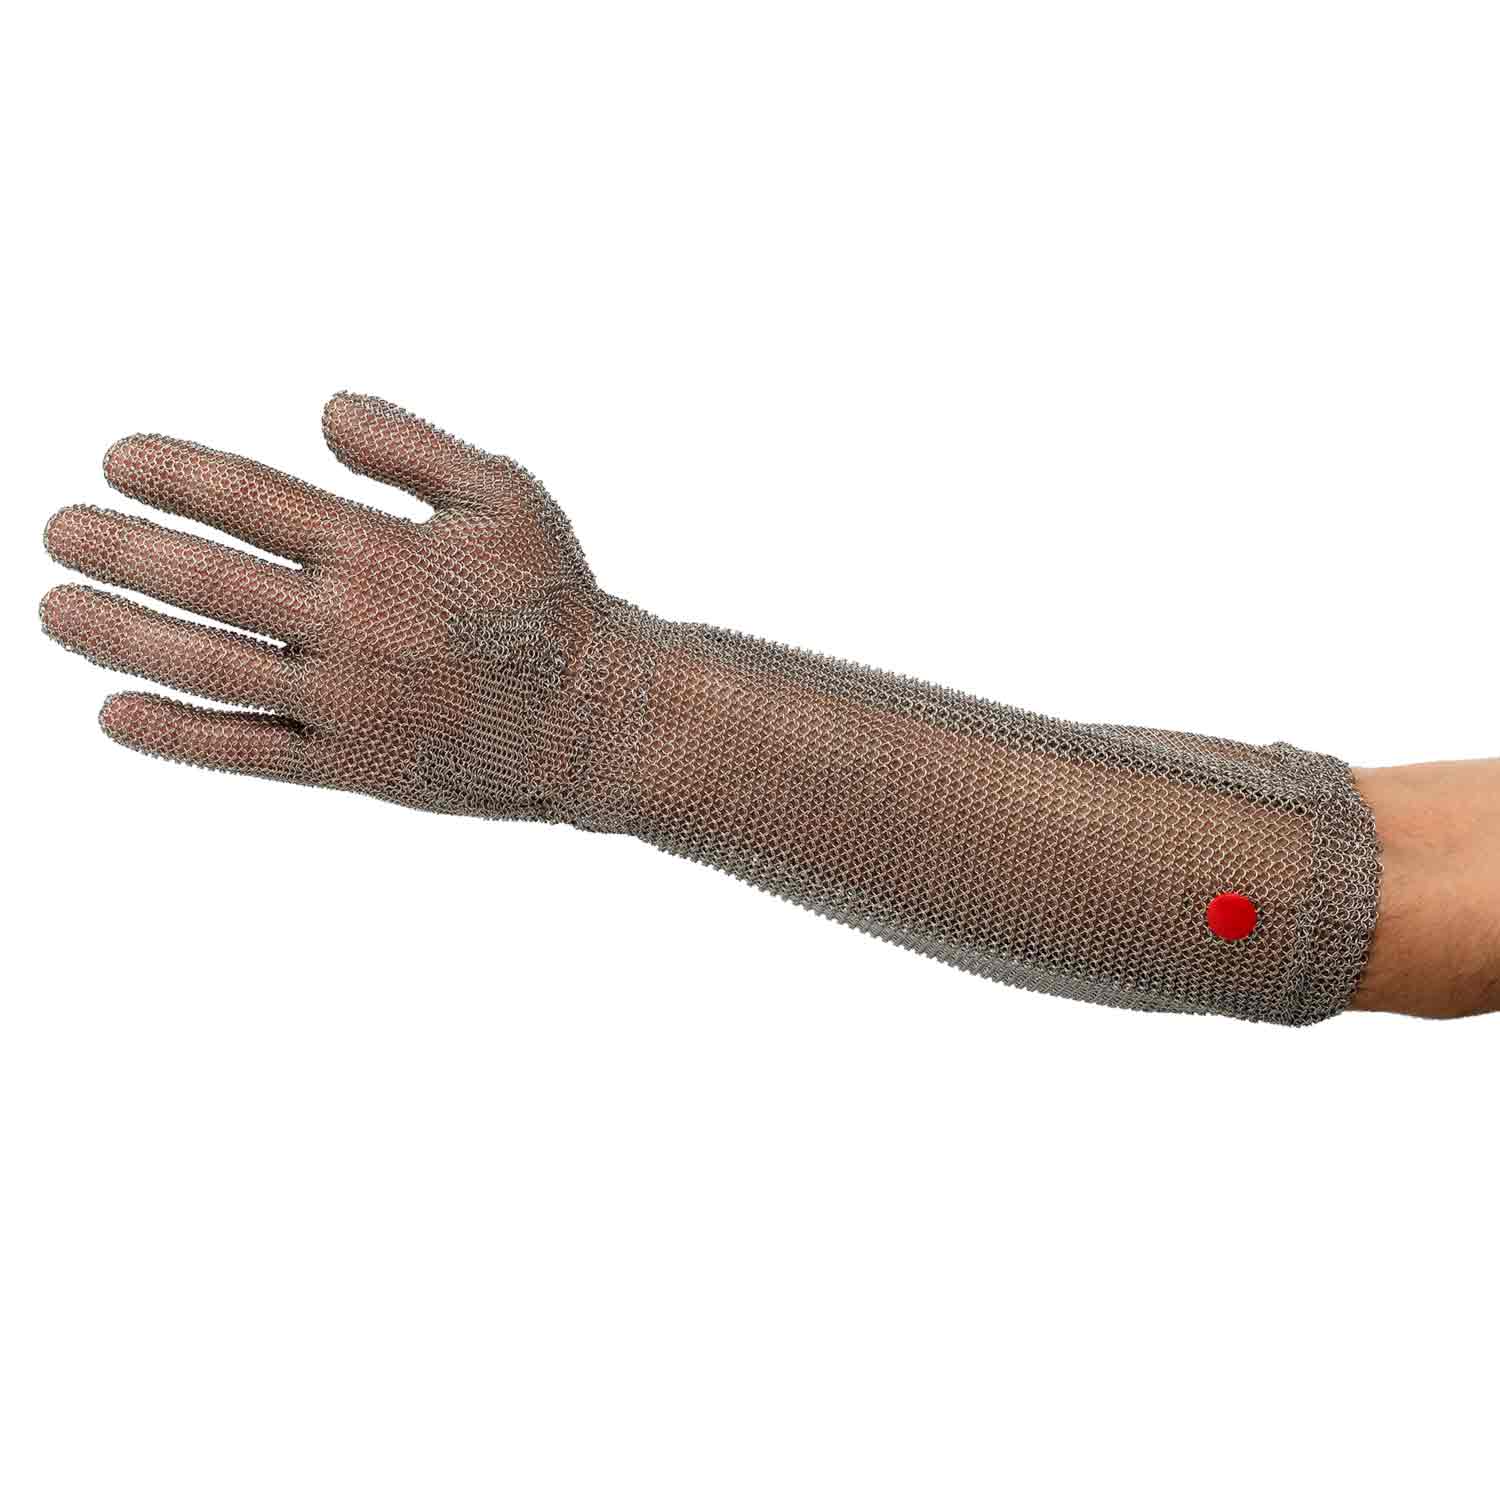 Manulatex Manulatex Mesh Wilco Flex 20cm Left Hand Glove Medium - Each Safety & PPE  